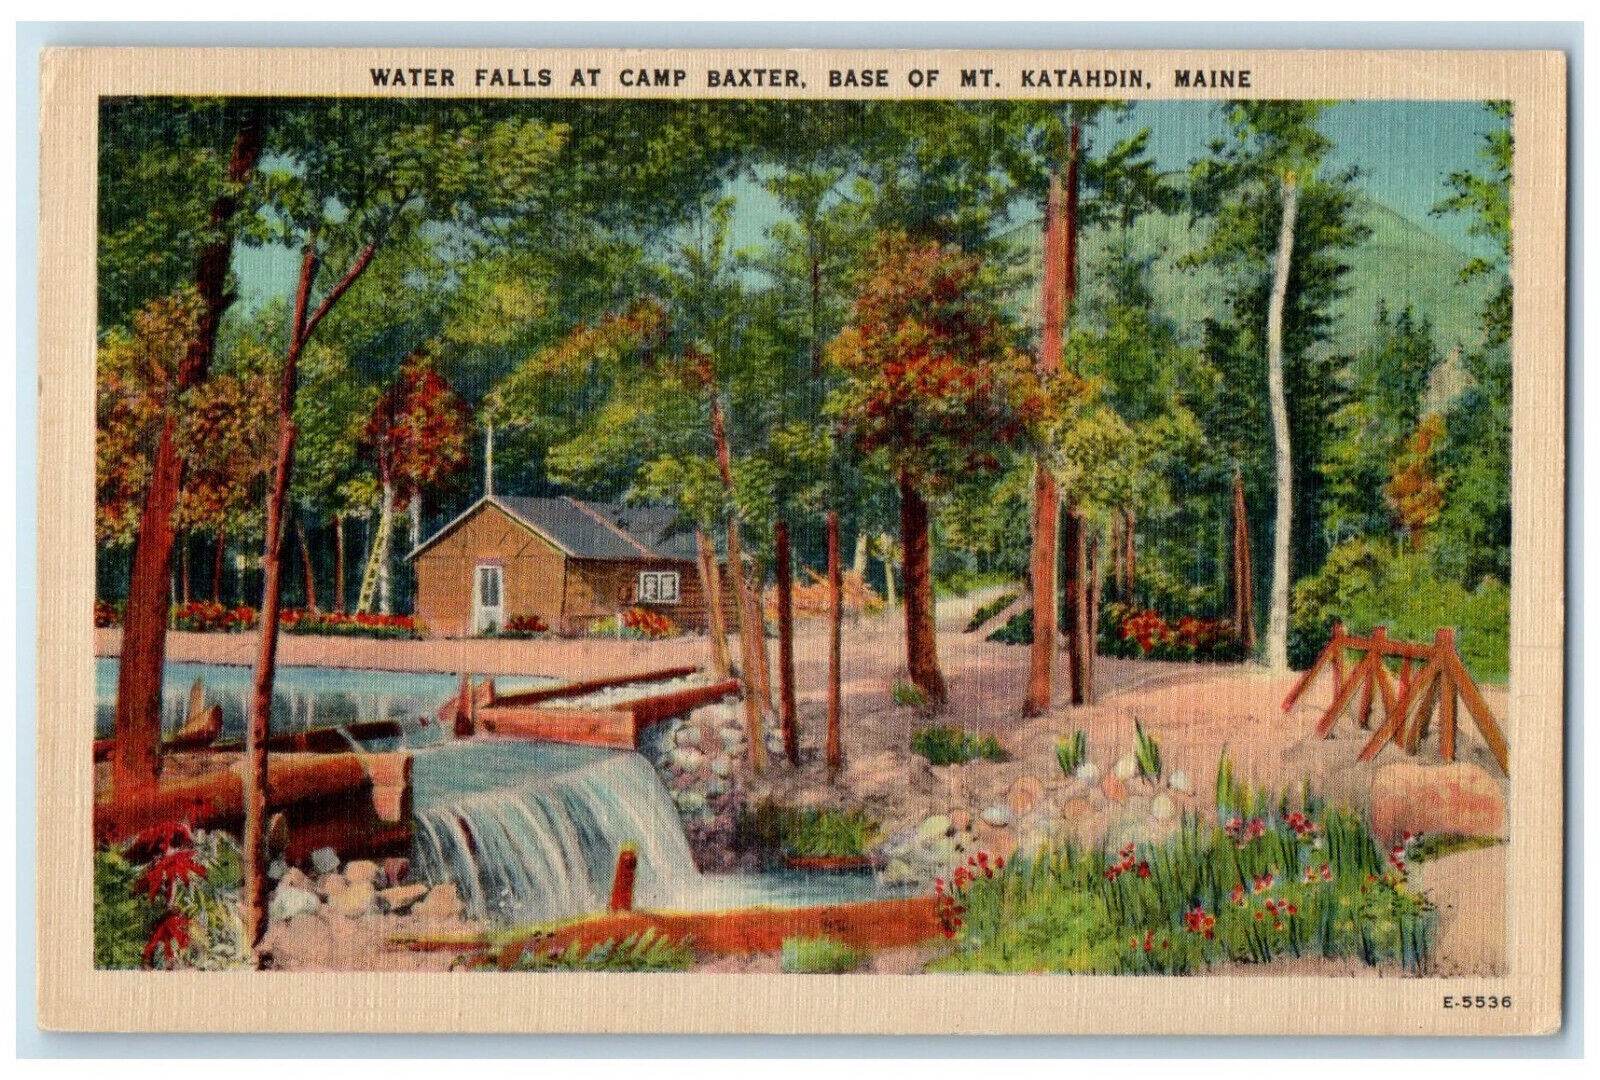 c1940s Water Falls at Camp Baxter Base of Mt. Katahdin Maine ME Vintage Postcard